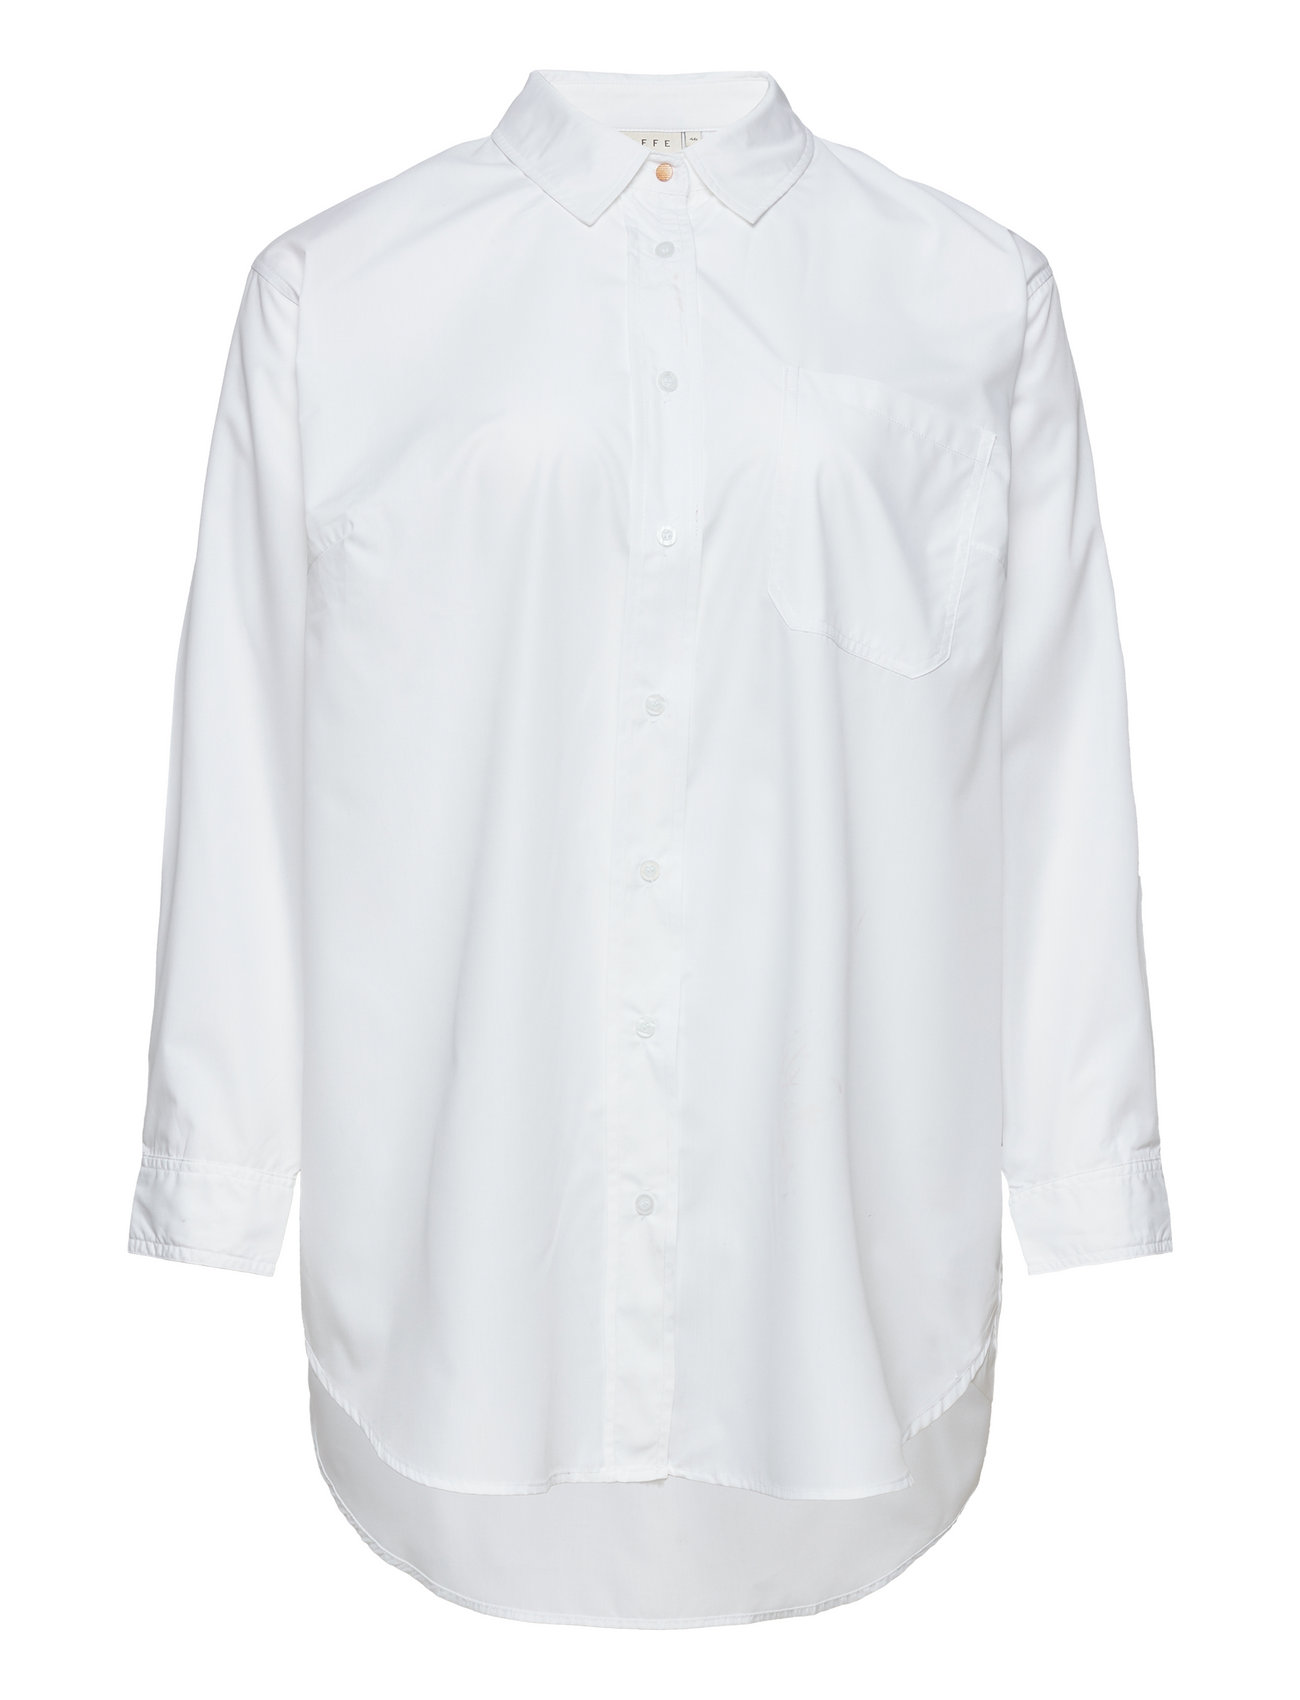 Kcl Shirt Tops Shirts Long-sleeved White Kaffe Curve